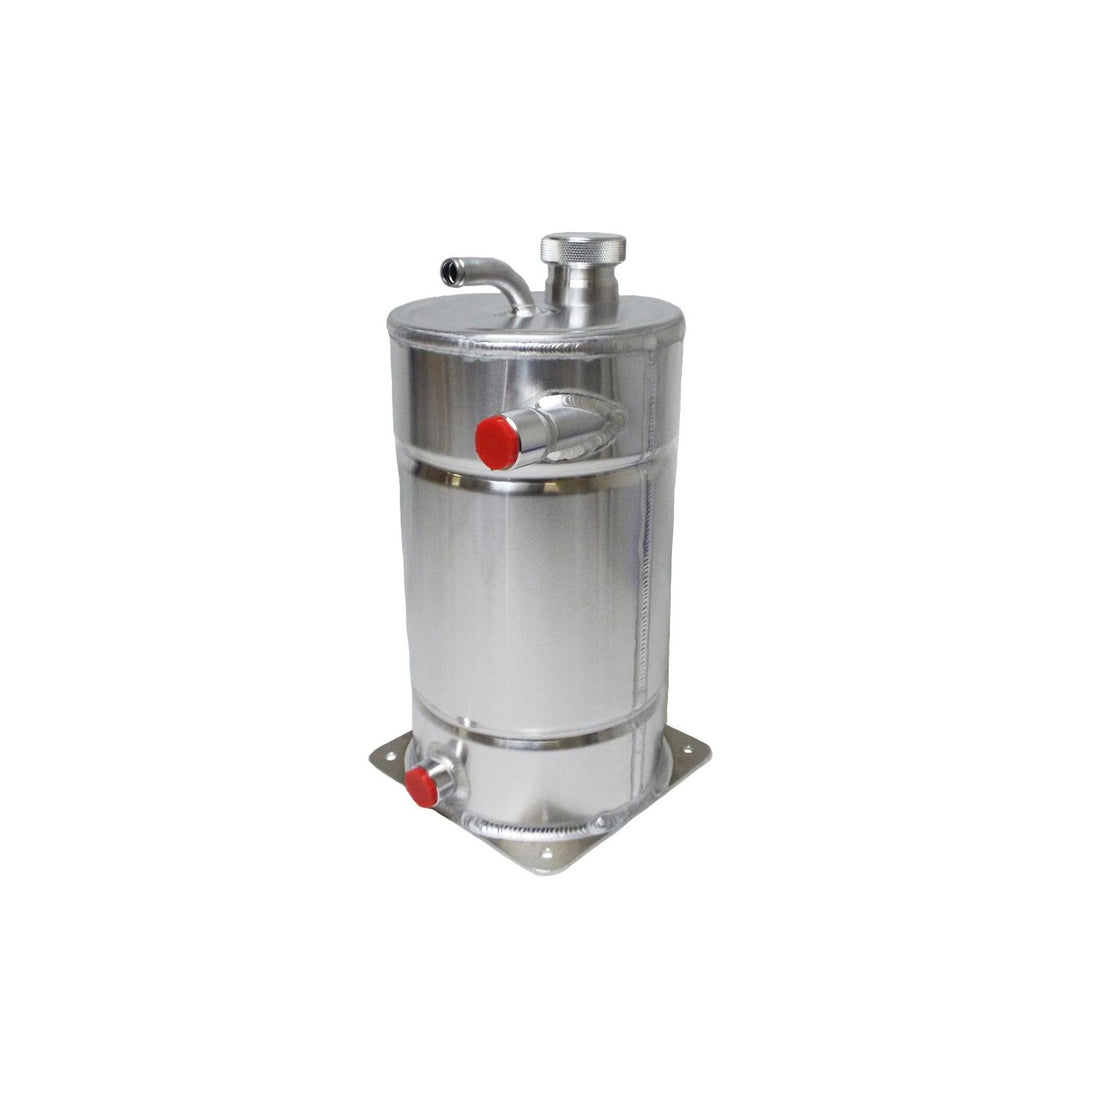 2 gallon alloy dry sump oil tank - standard cap